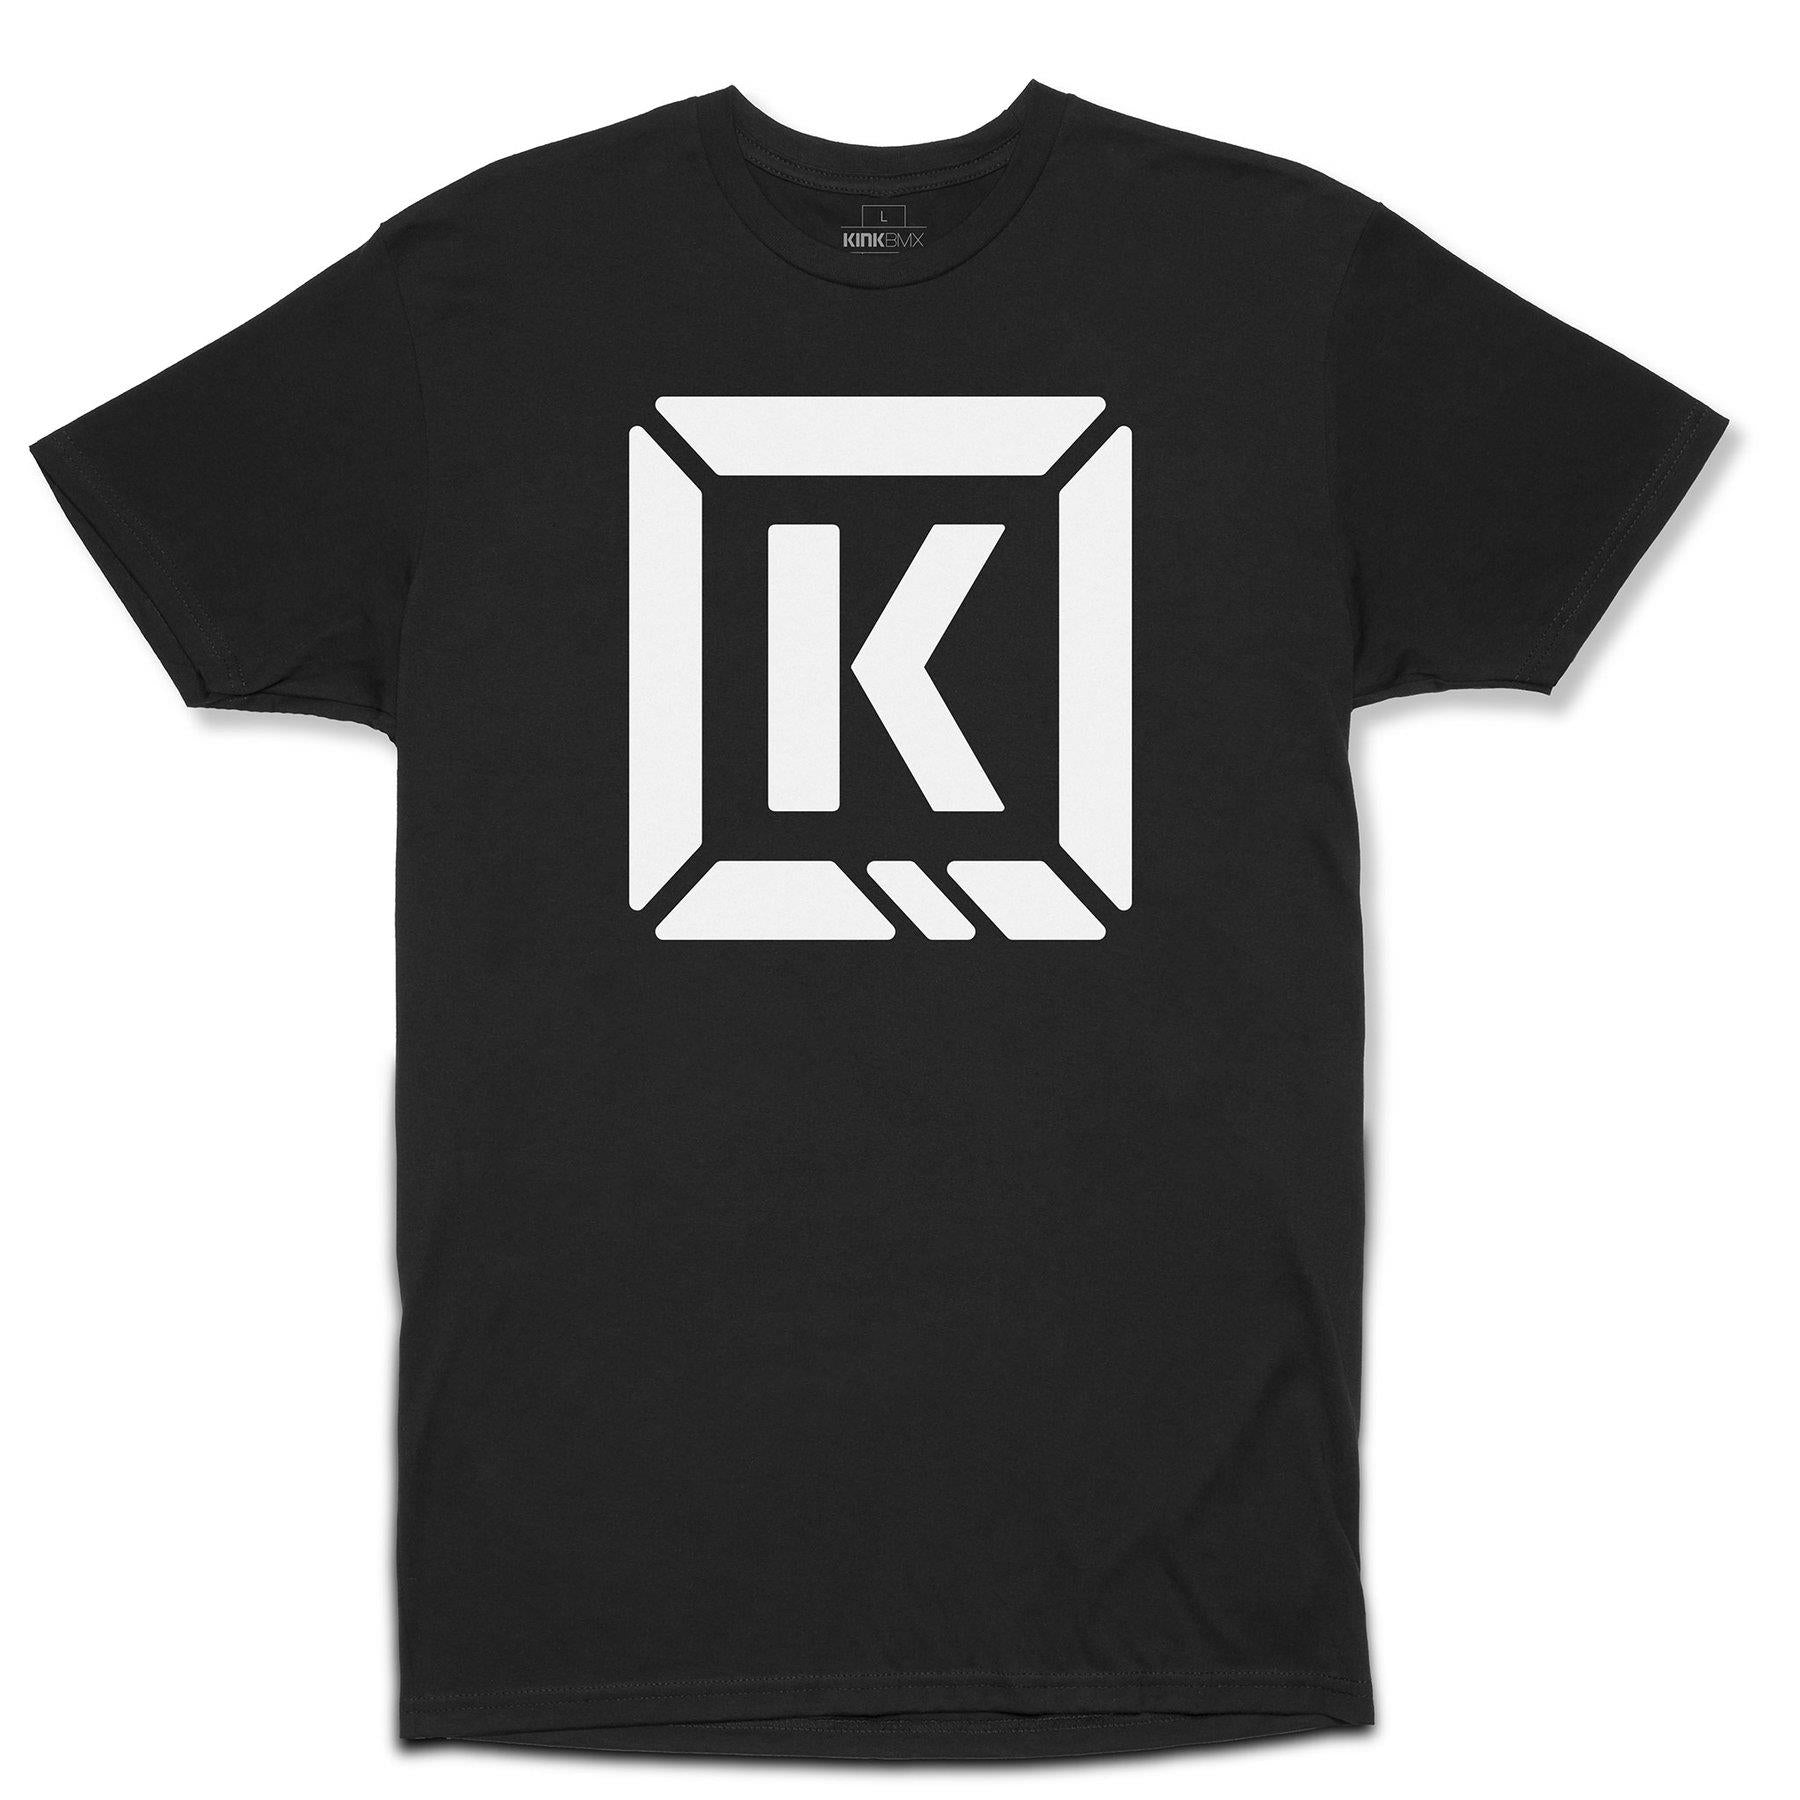 Kink Represent T-Shirt - Black